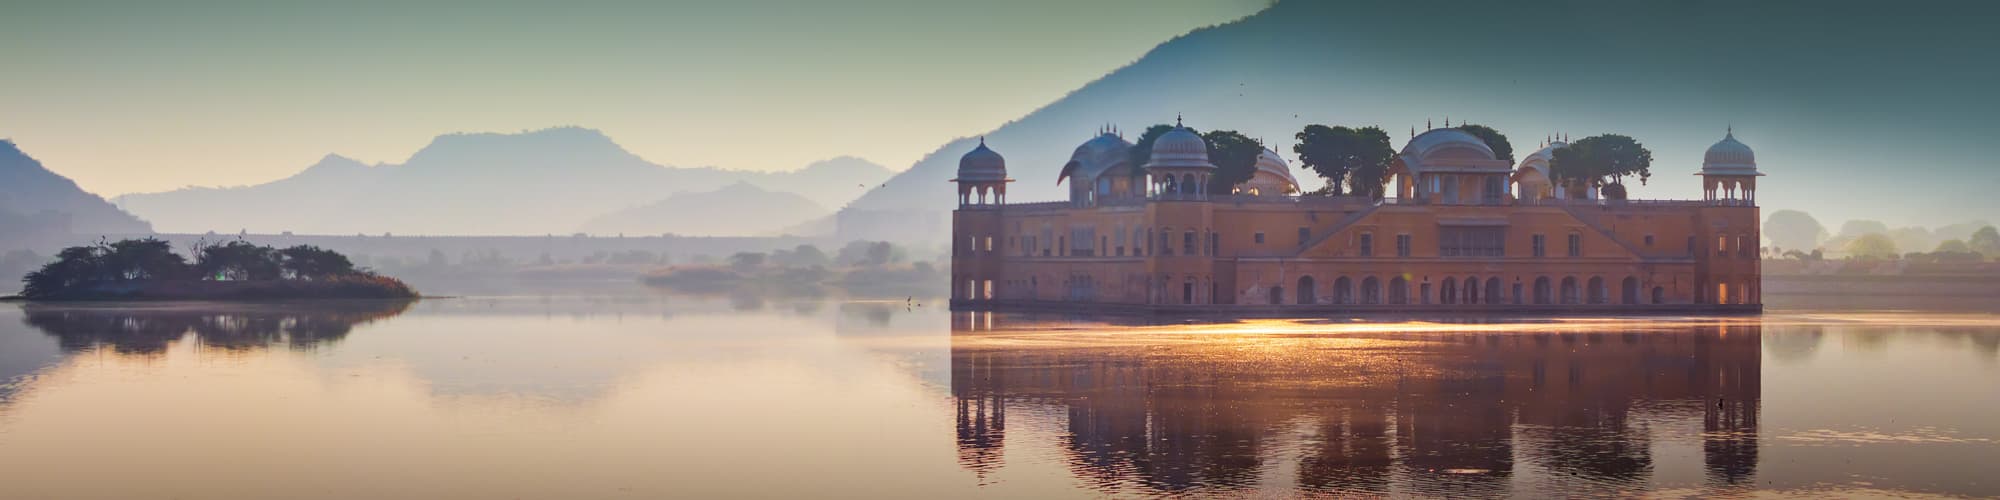 Trek au Rajasthan : circuit, randonnée et voyage © honzahruby / Adobe Stock